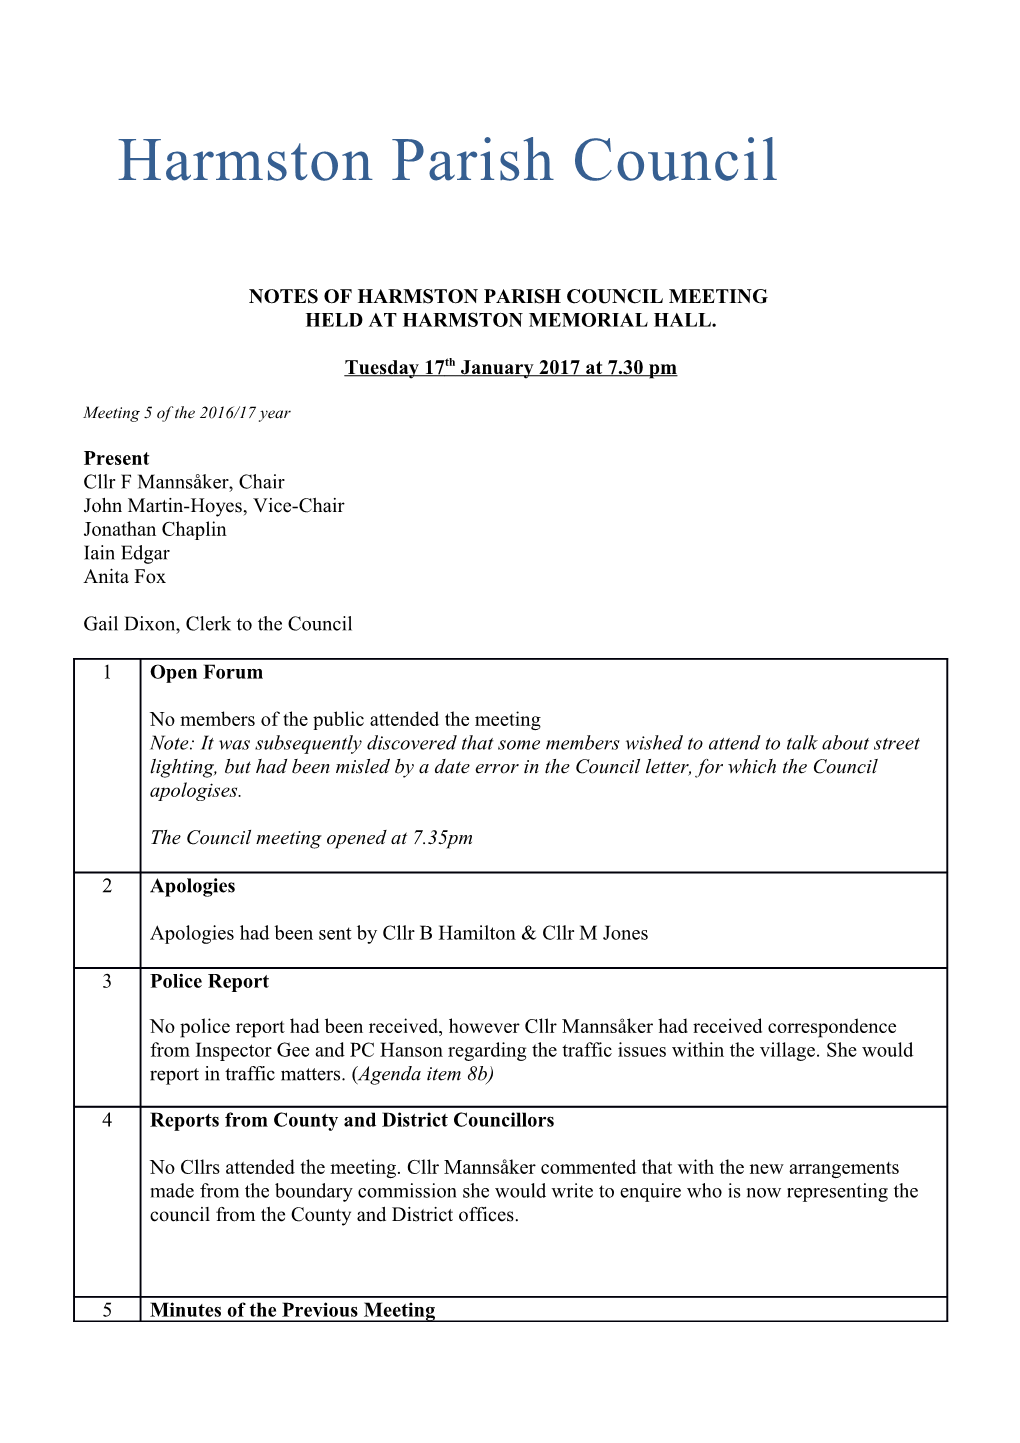 Notes of Harmston Parish Council Meeting